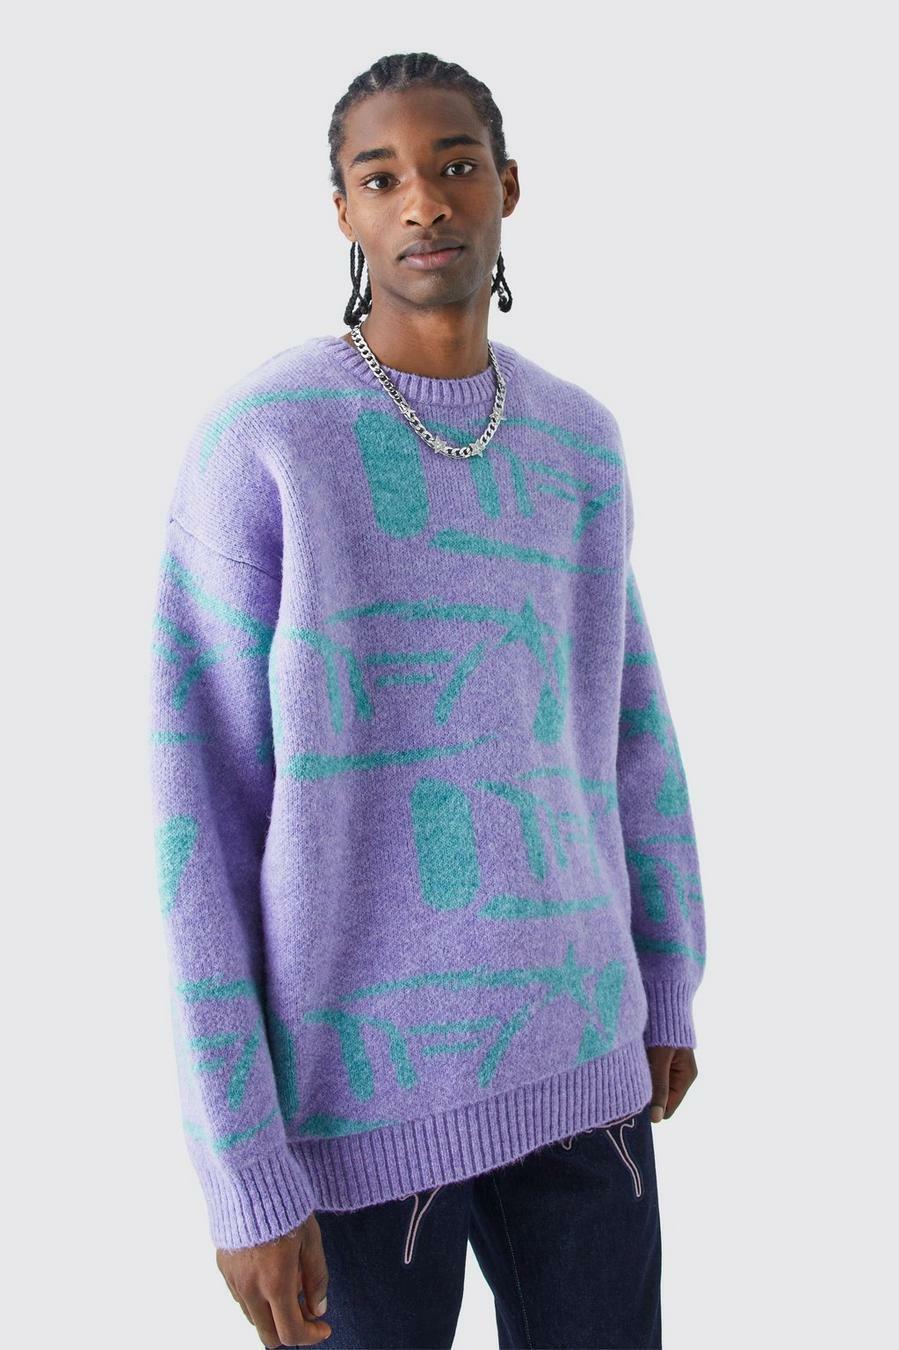 fioletowy sweter oversize wzór